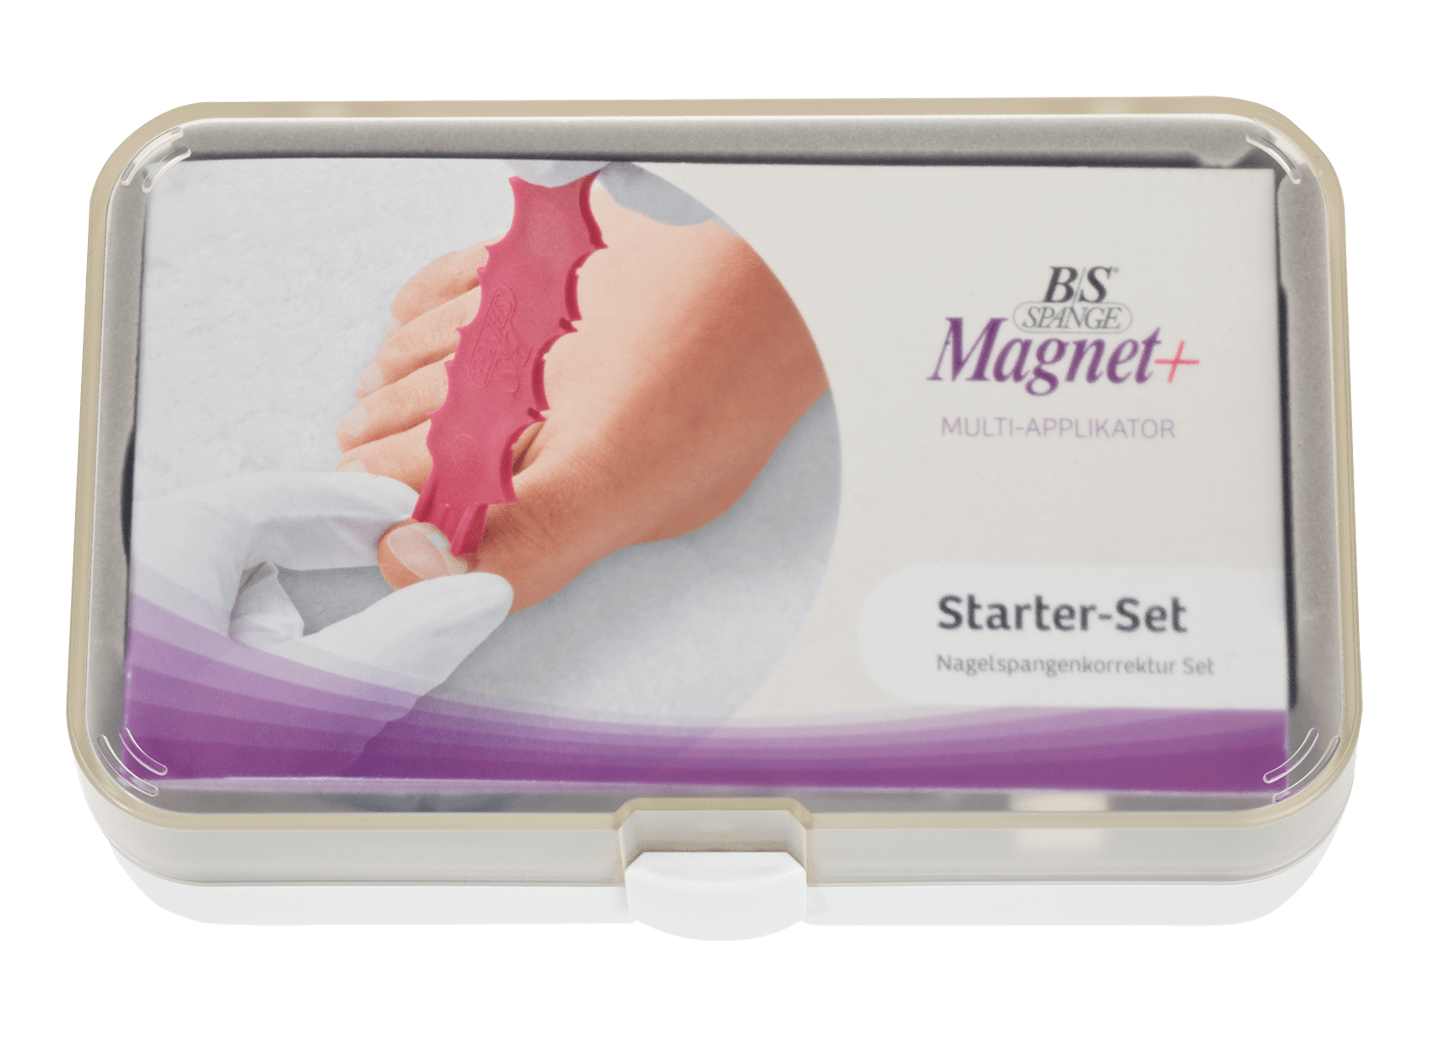 B/S - Magnet+ Starter-Set mit Multi-Applikator